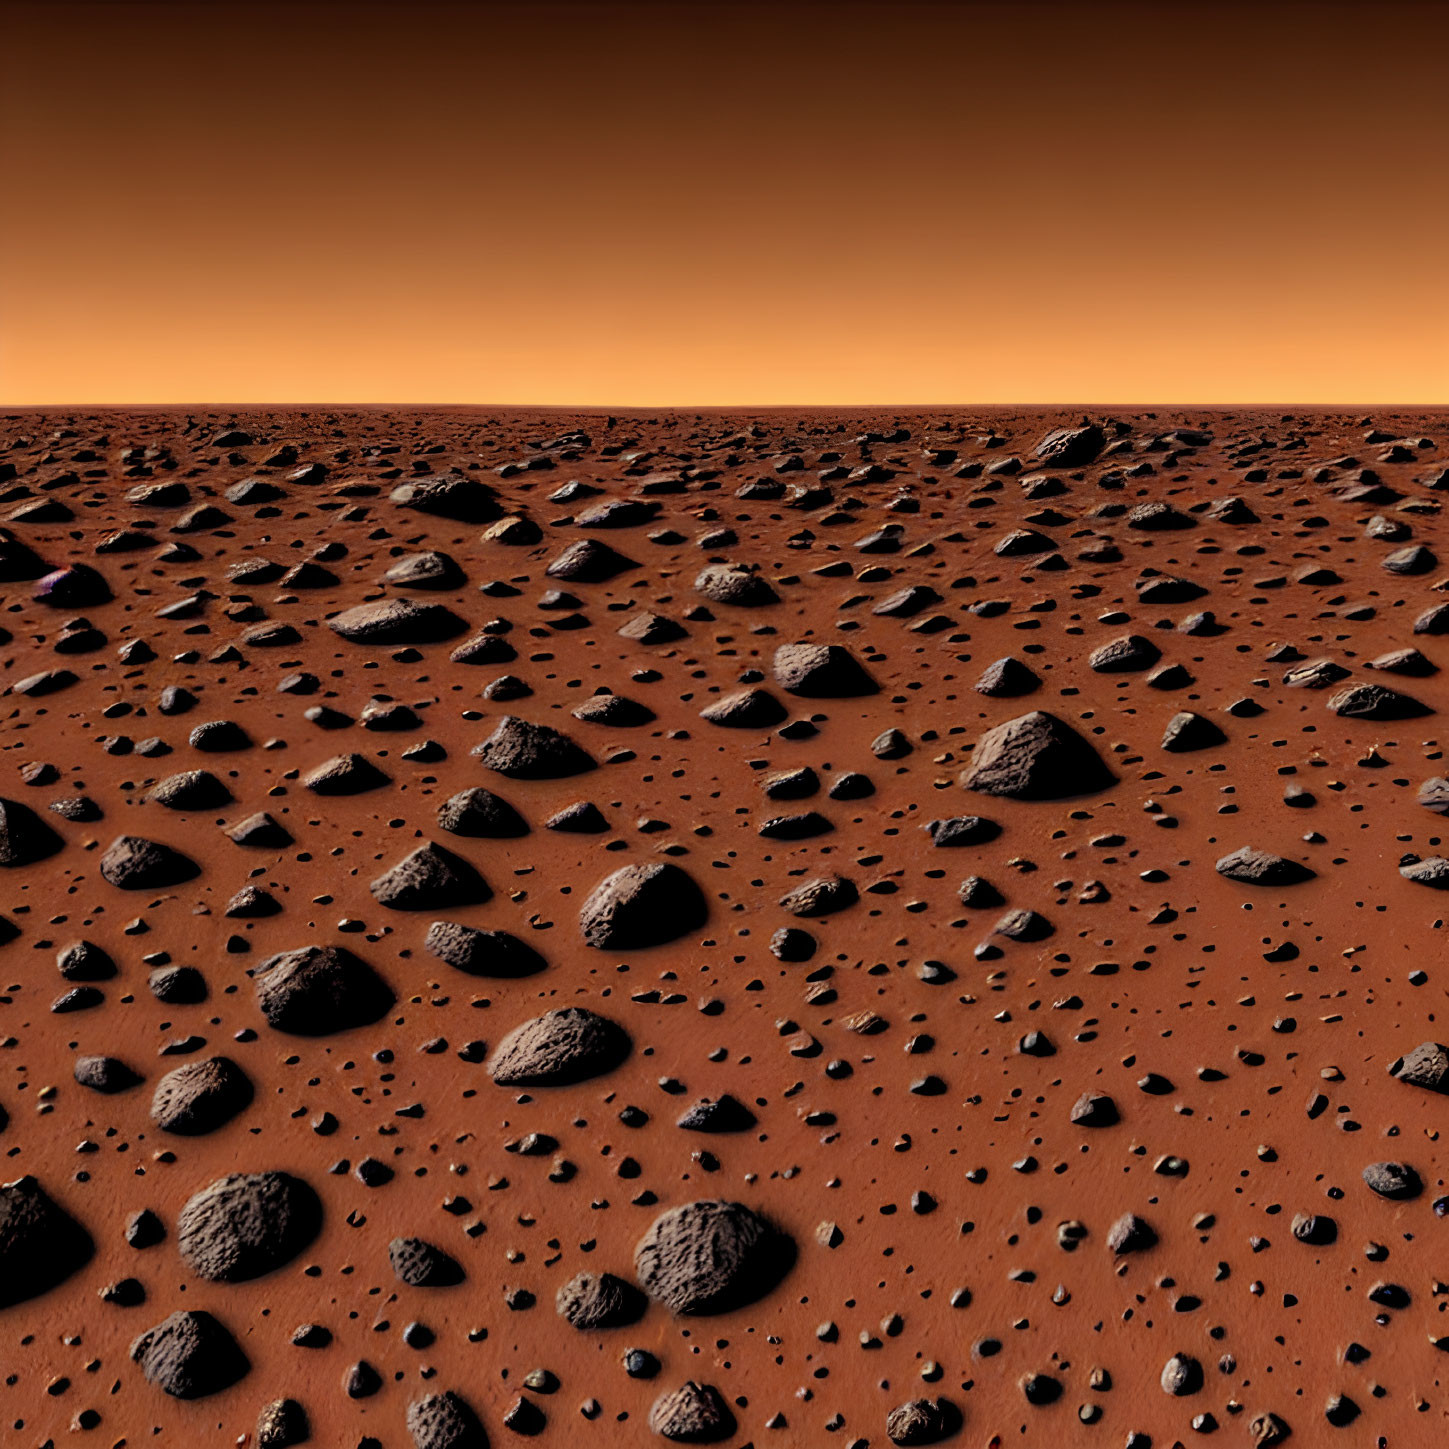 Martian landscape with orange sky and rocky terrain